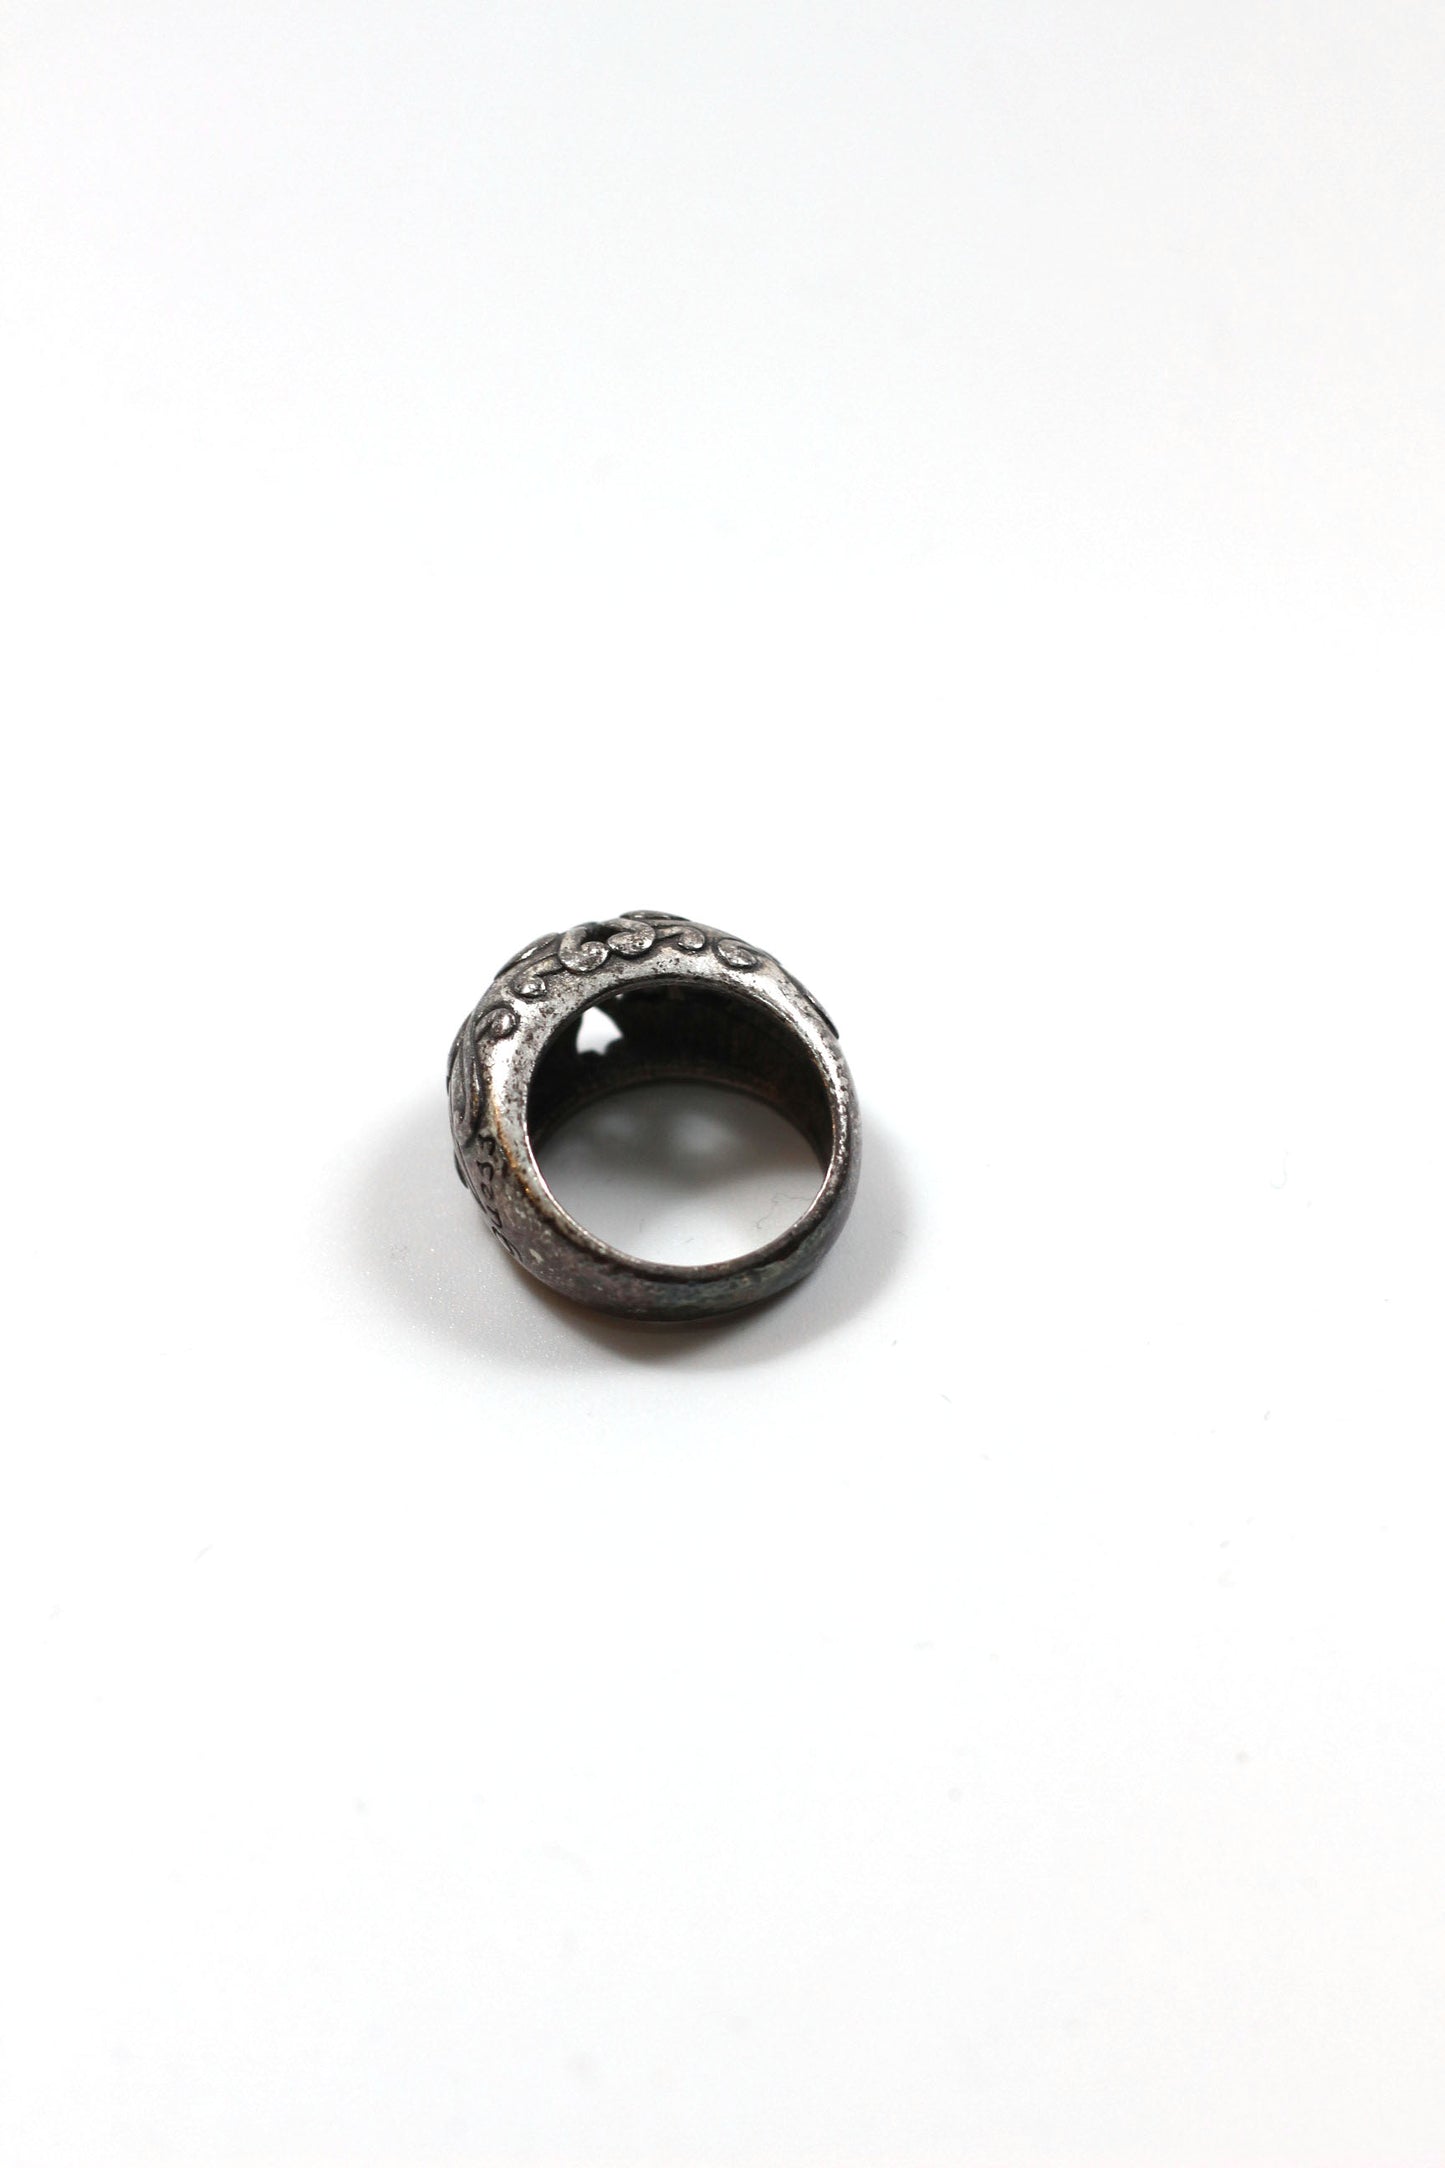 Vintage silver ring 強固な意志と不屈の精神